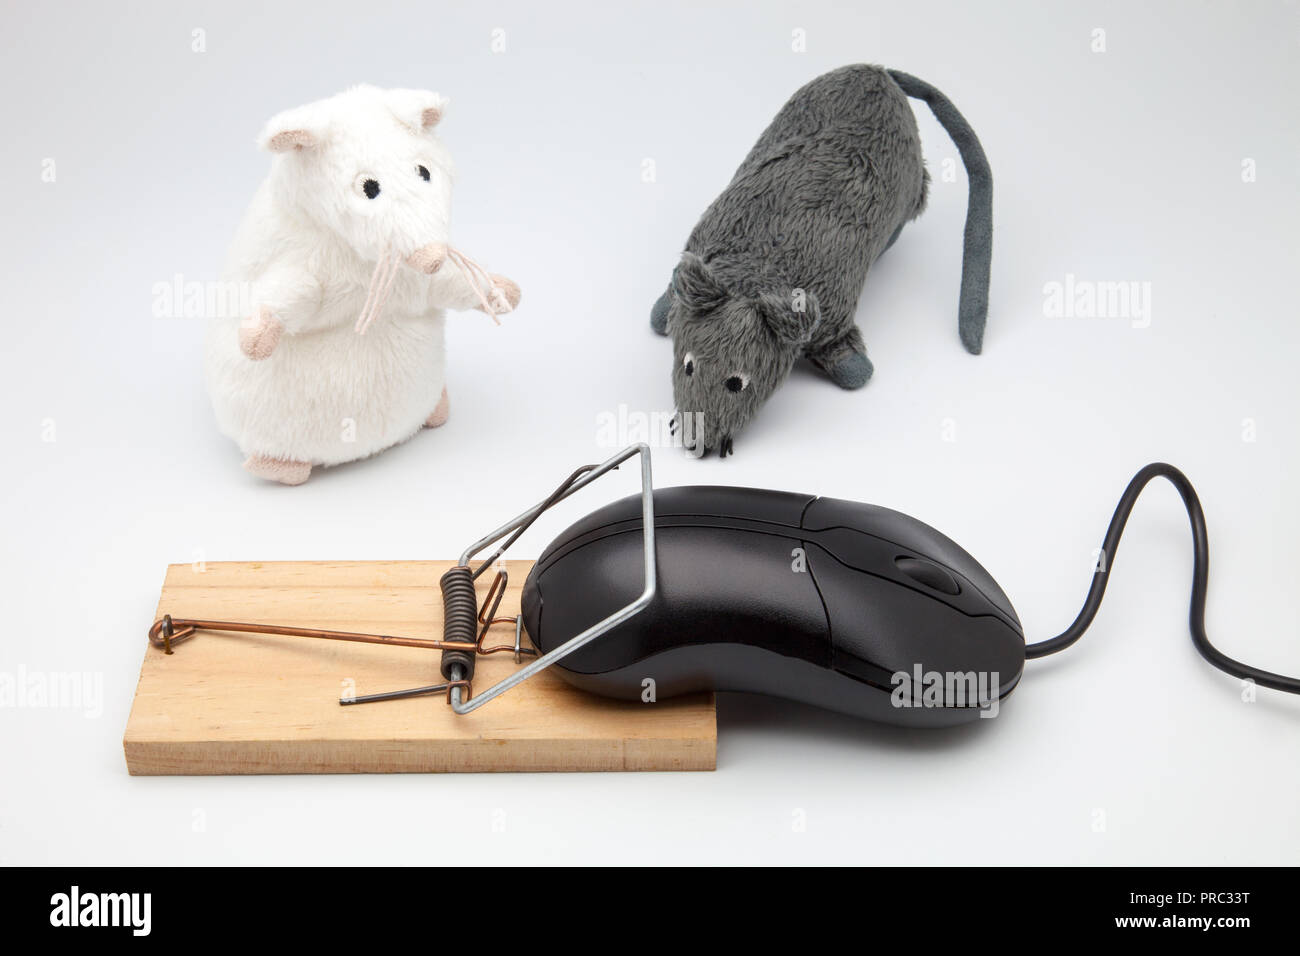 Atrapar ratones